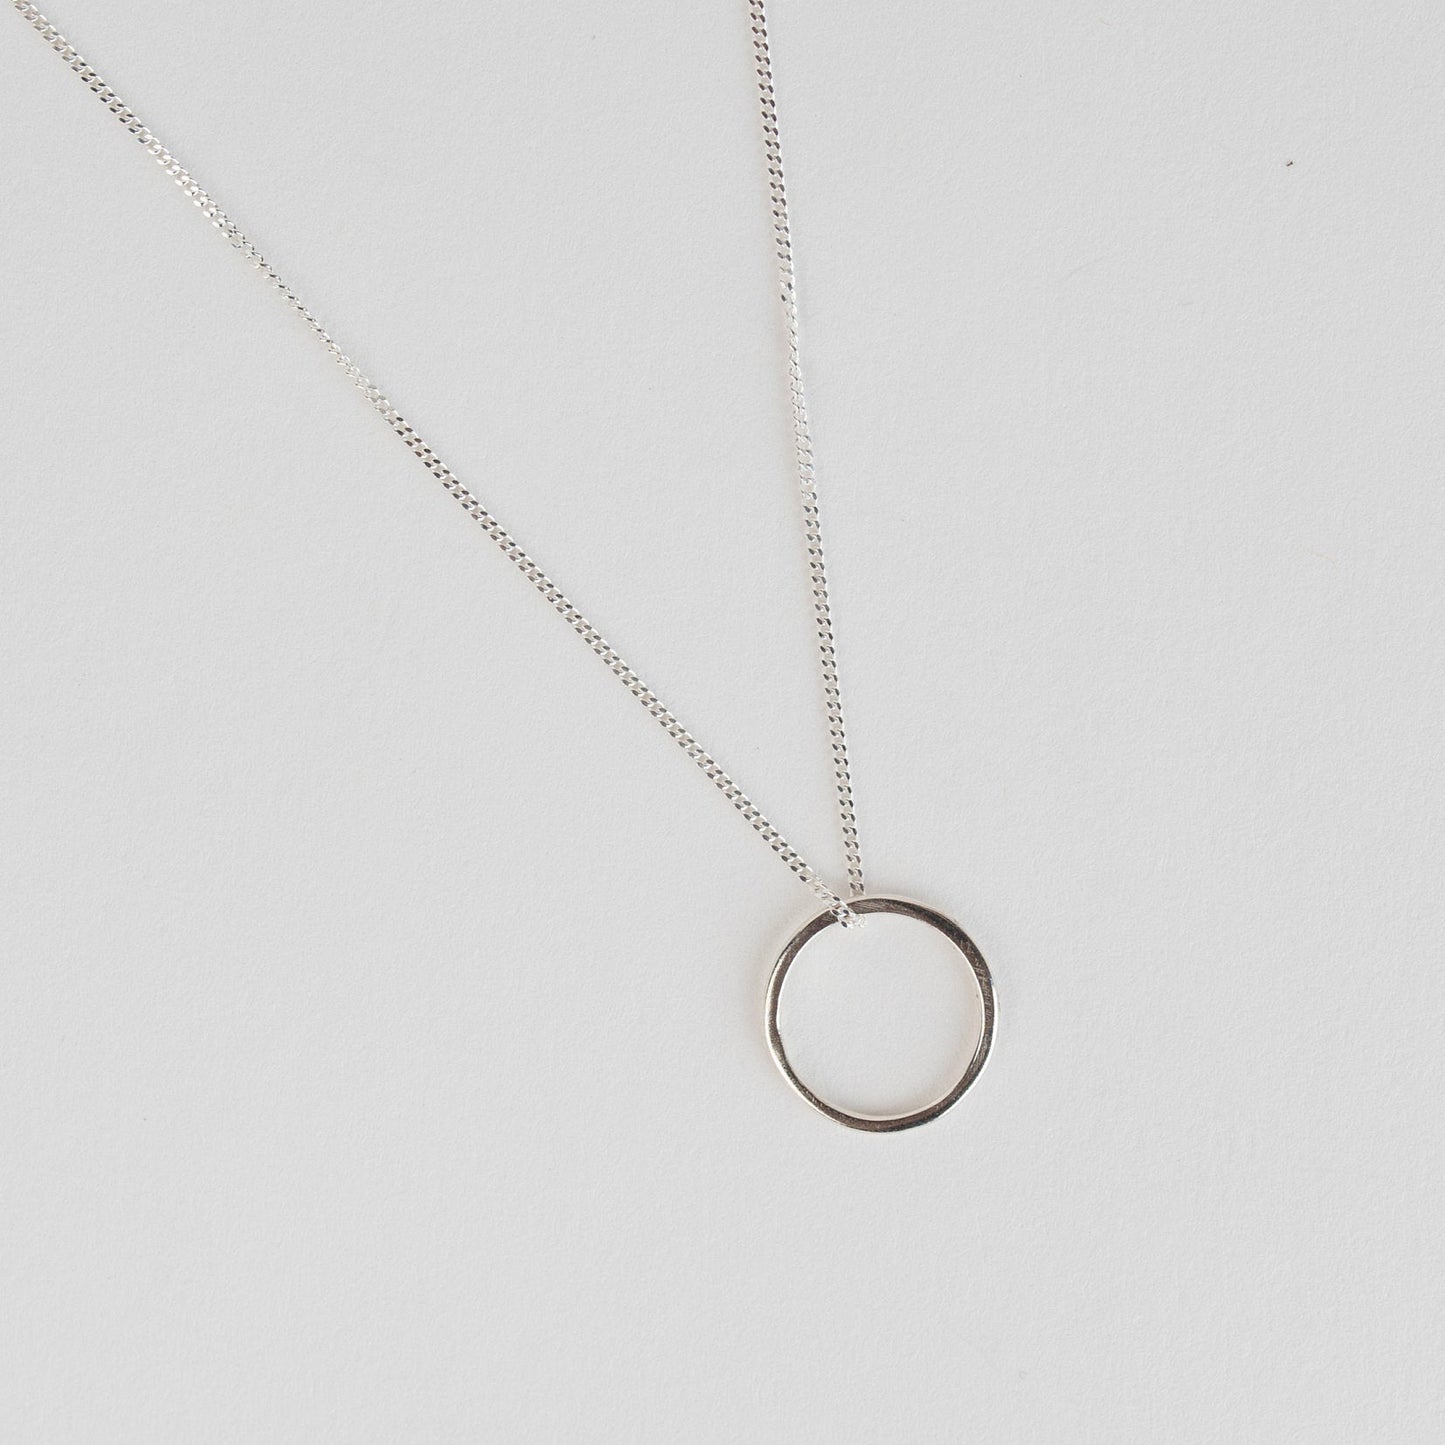 Mini circle necklace - 45 cm